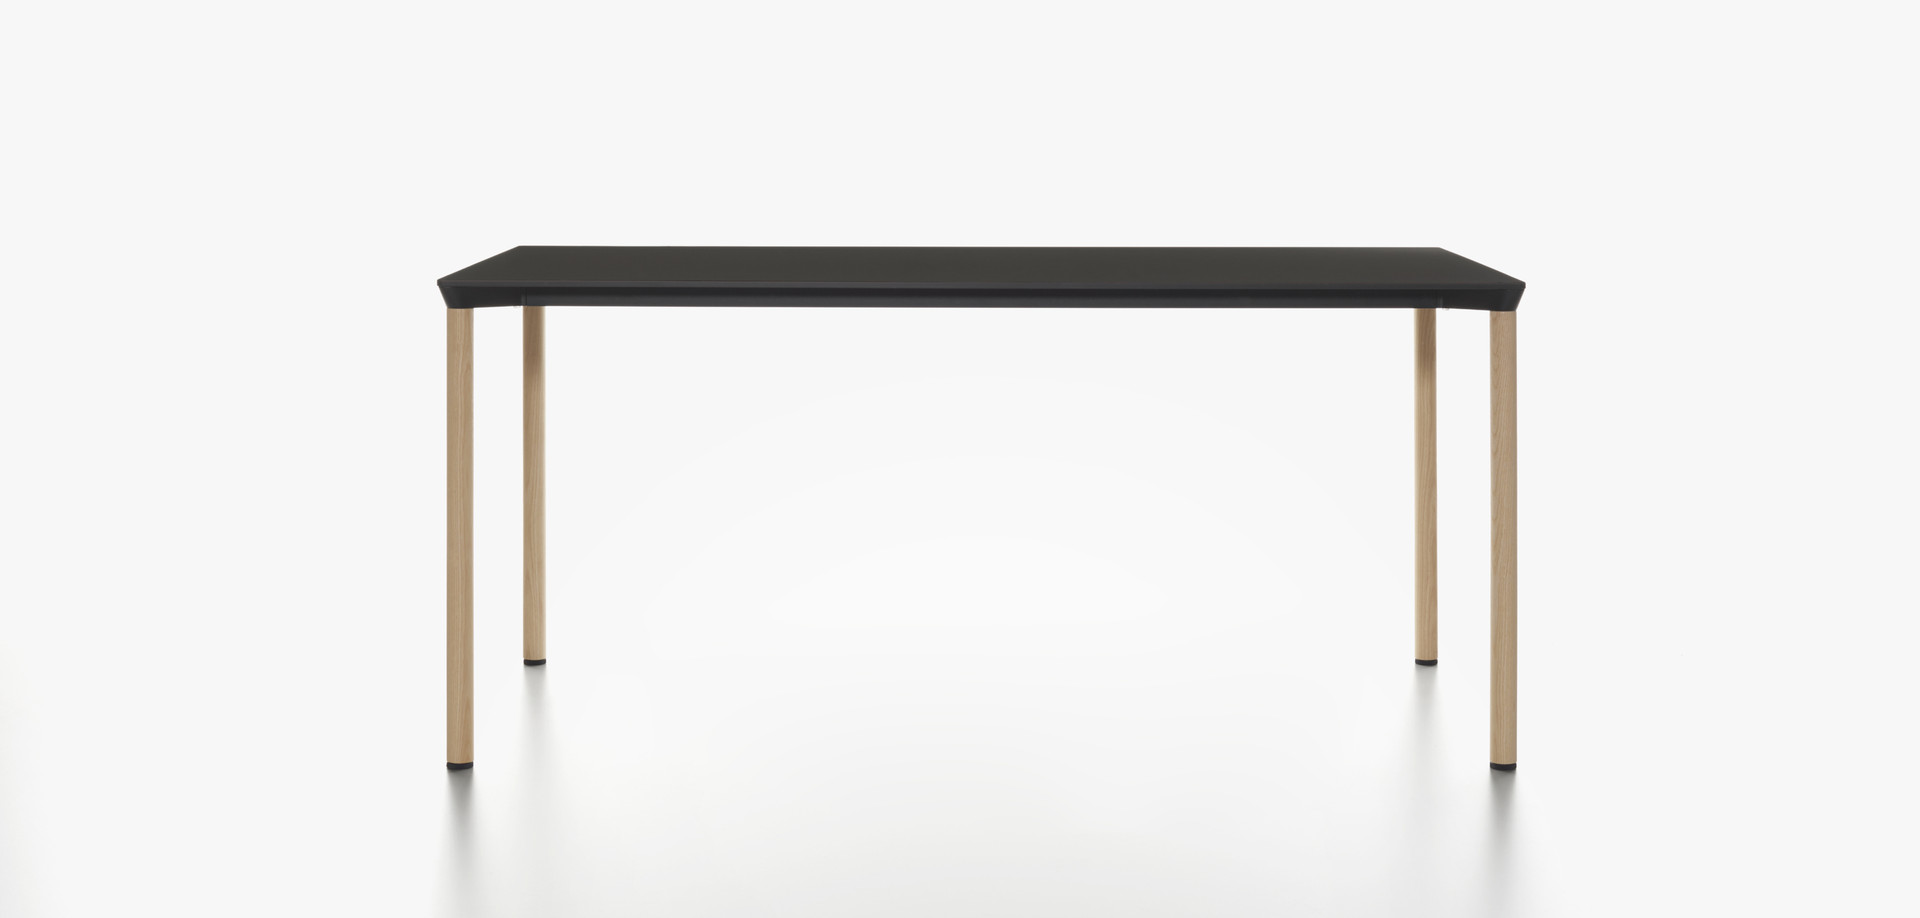 Plank - MONZA table rectangular, black HPL table top, natural ash legs